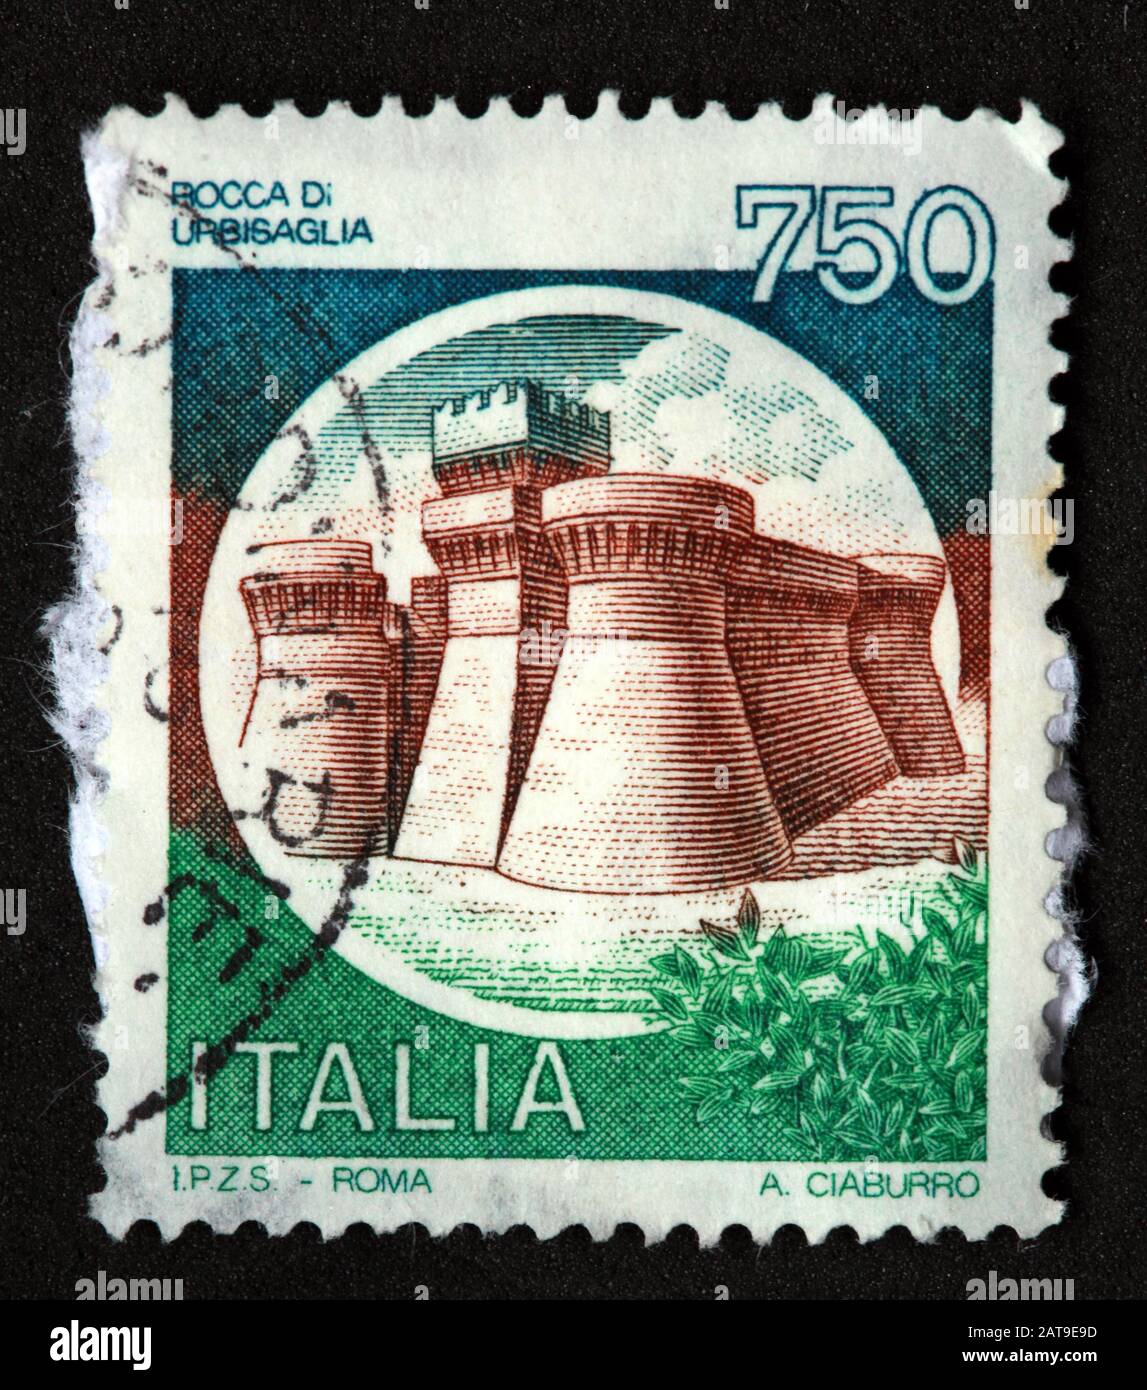 Italian stamp, poste Italia used and franked stamp, castles of Italy,   Italia 750lire Bocca Di Urbisaglia Roma A.Ciaburro Stock Photo